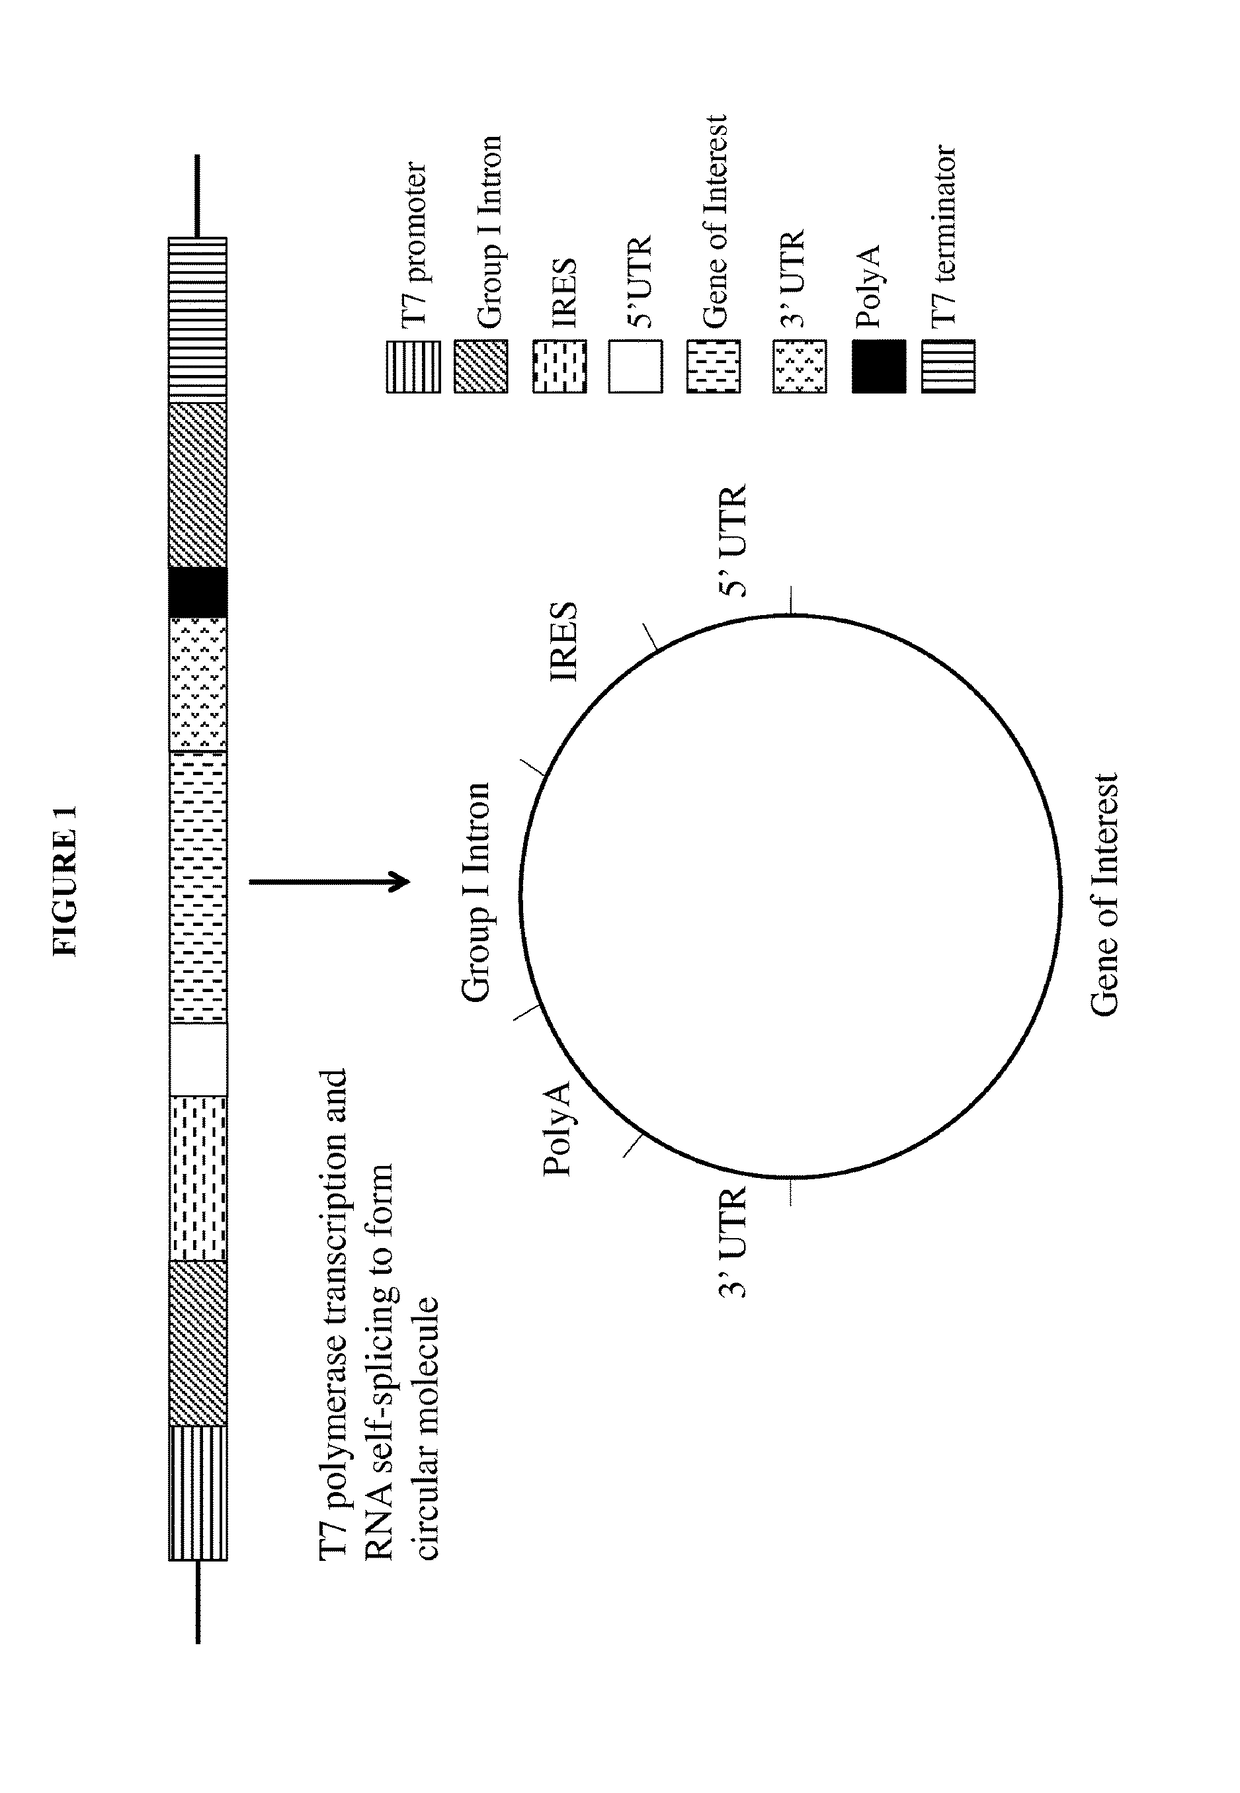 Intracellular translation of circular RNA